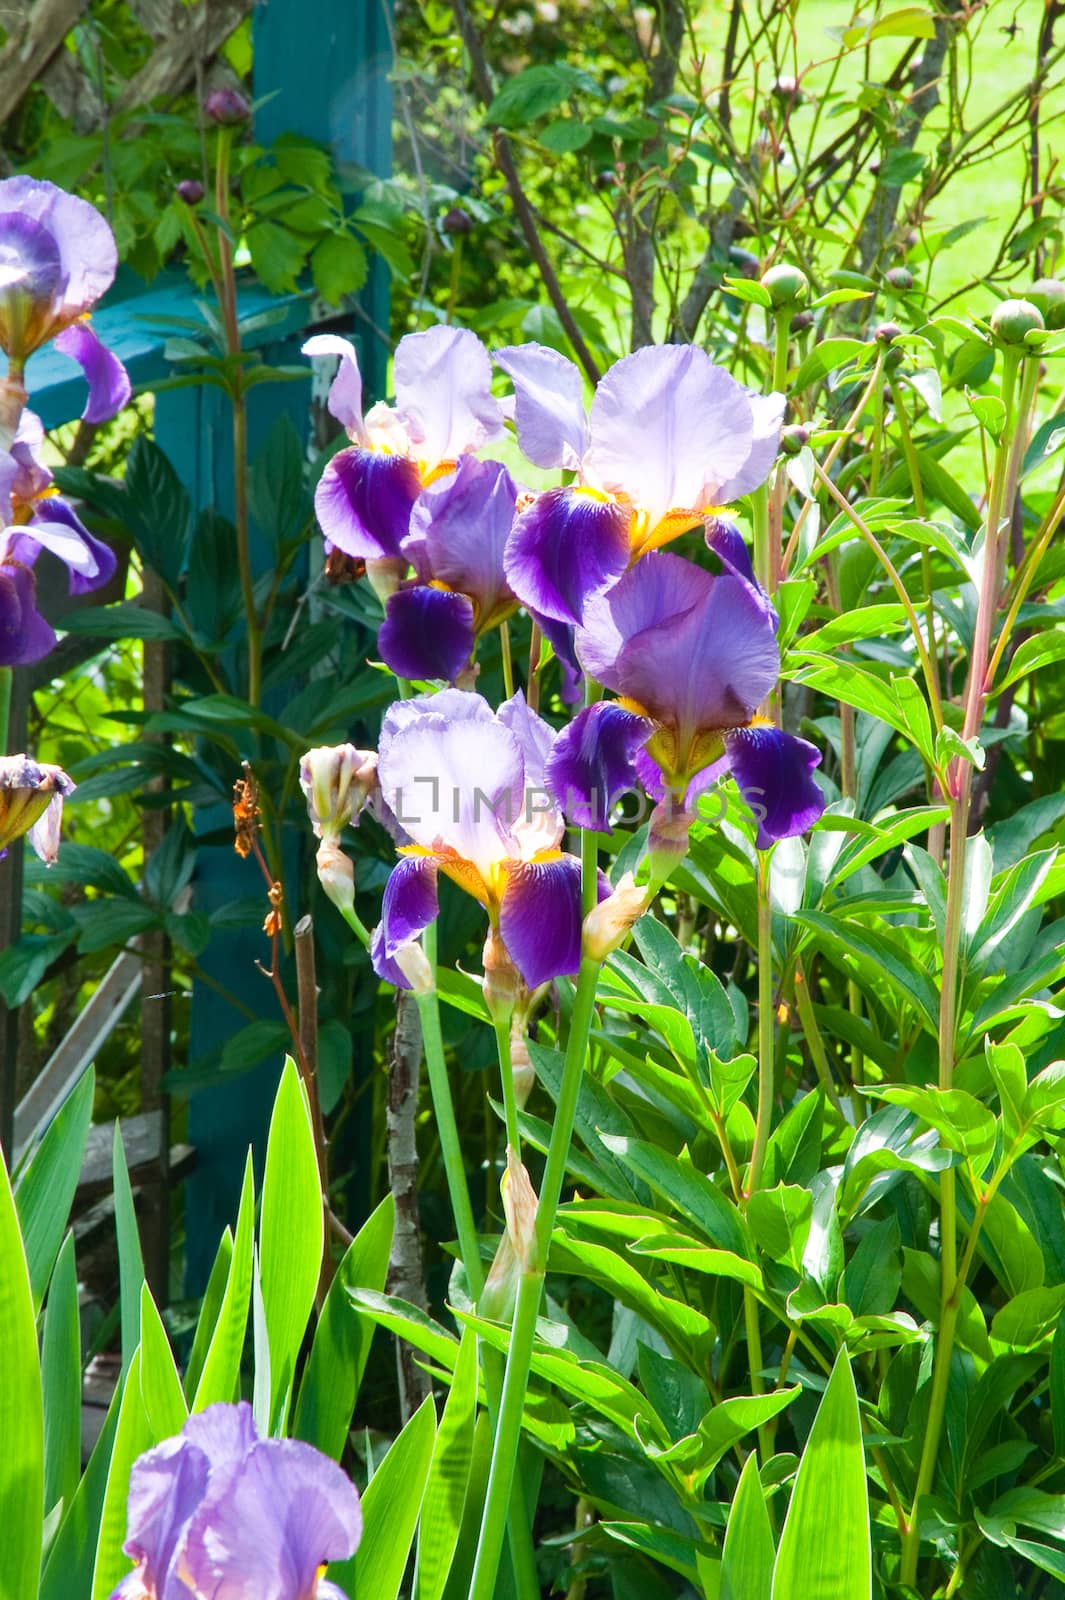 Sunlit iris flowers in a garden